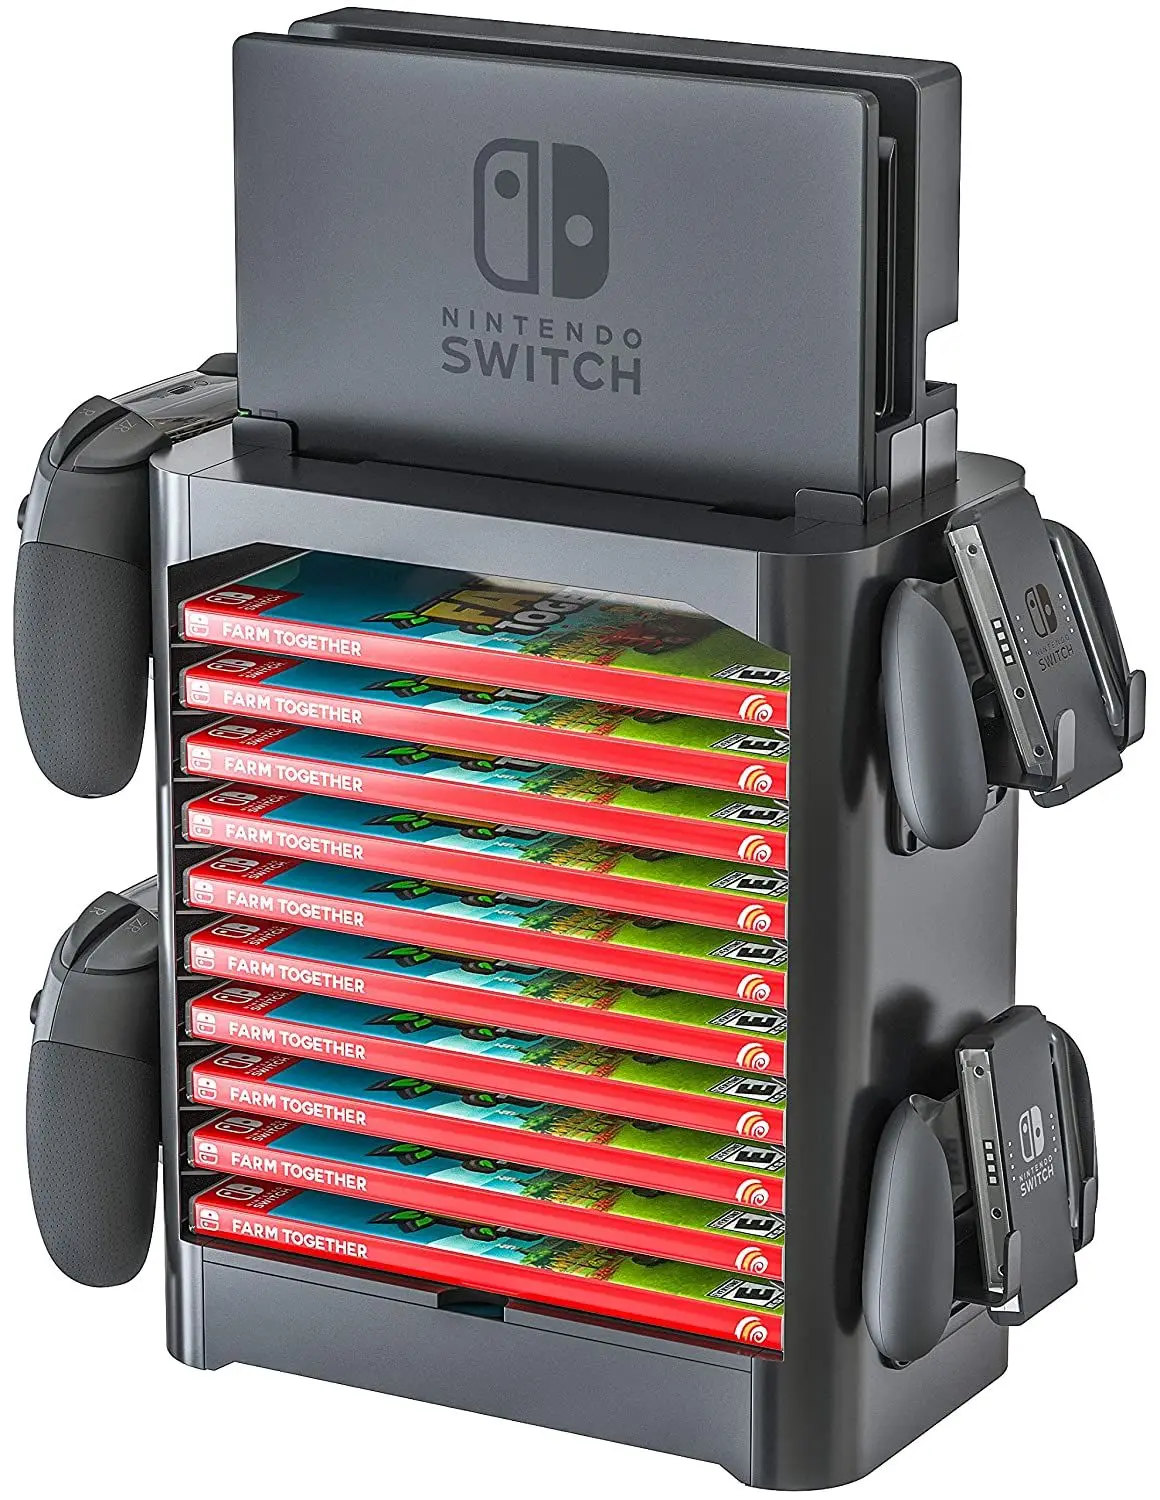 Nintend Switch Game Accessories Storage Stand 10 Games Disc Bracket Controller Holder Organizer For Nintendo Switch